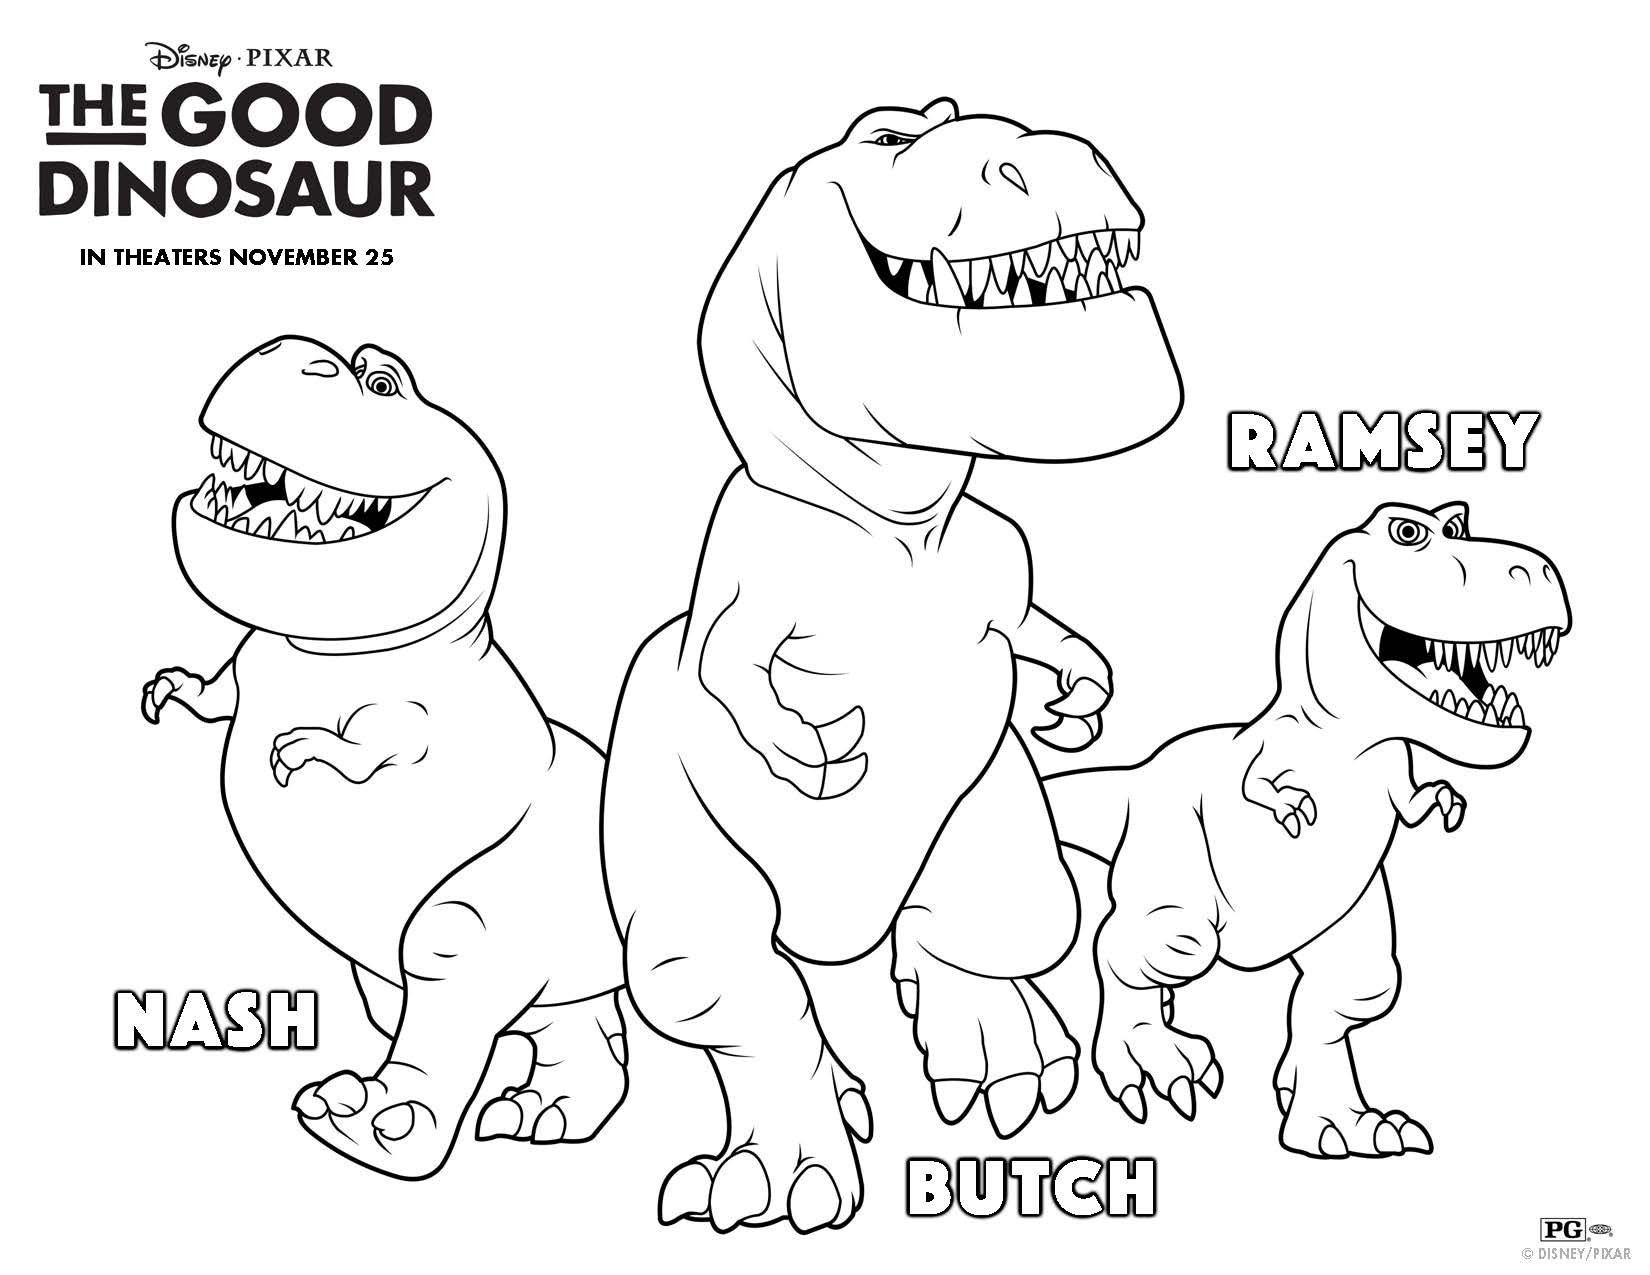 good, Dinosaur, Animation, Fantasy, Cartoon, Family, Comedy, Adventure, Drama, 1gdino, Disney, Poster Wallpaper